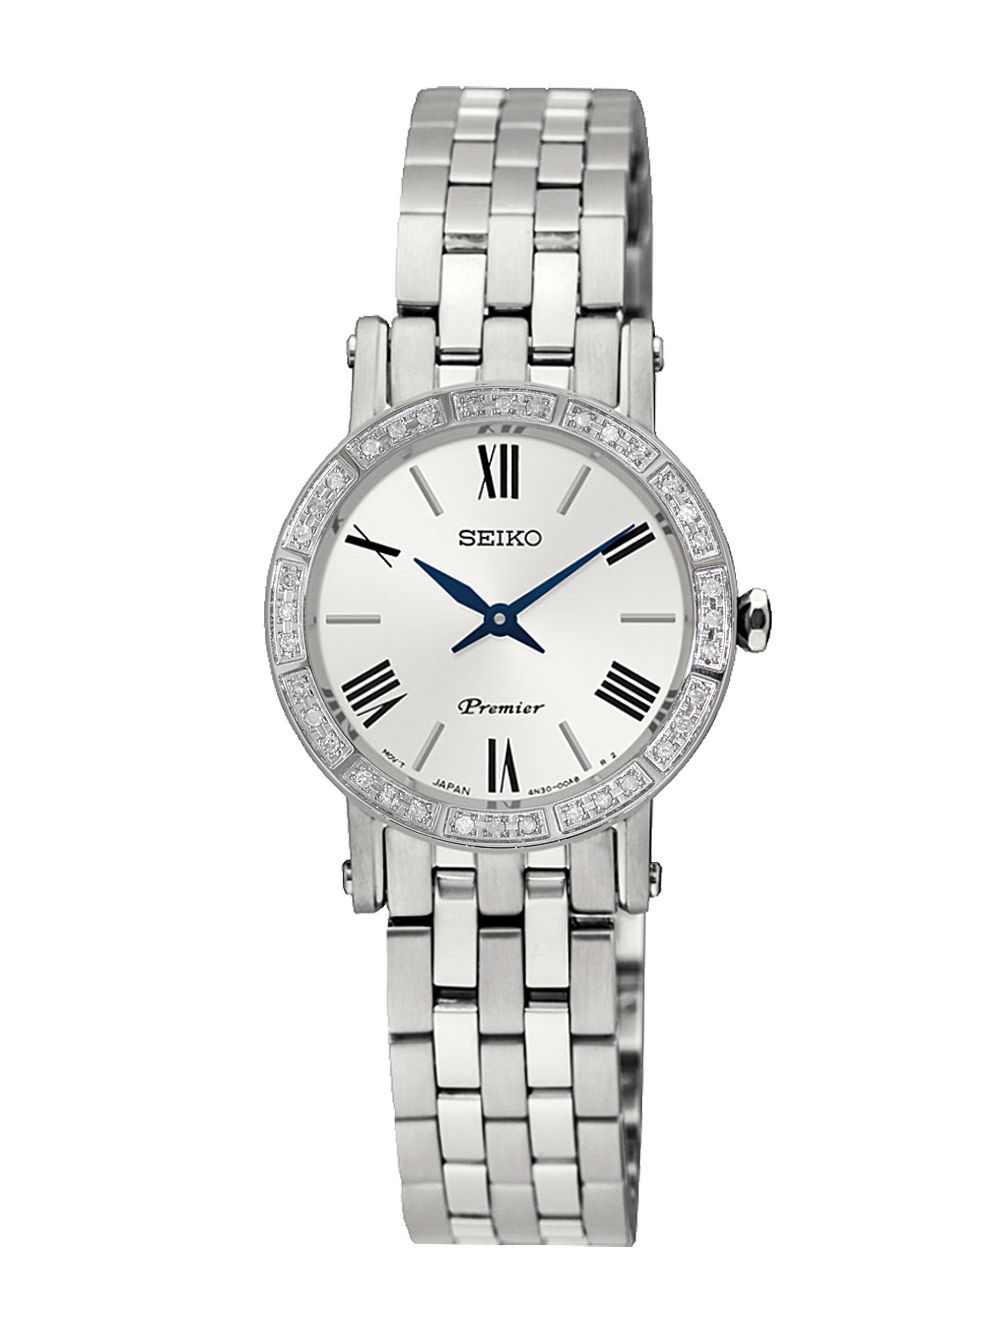 SEIKO SWR023P1 Premier Ladies Wrist Watch • uhrcenter